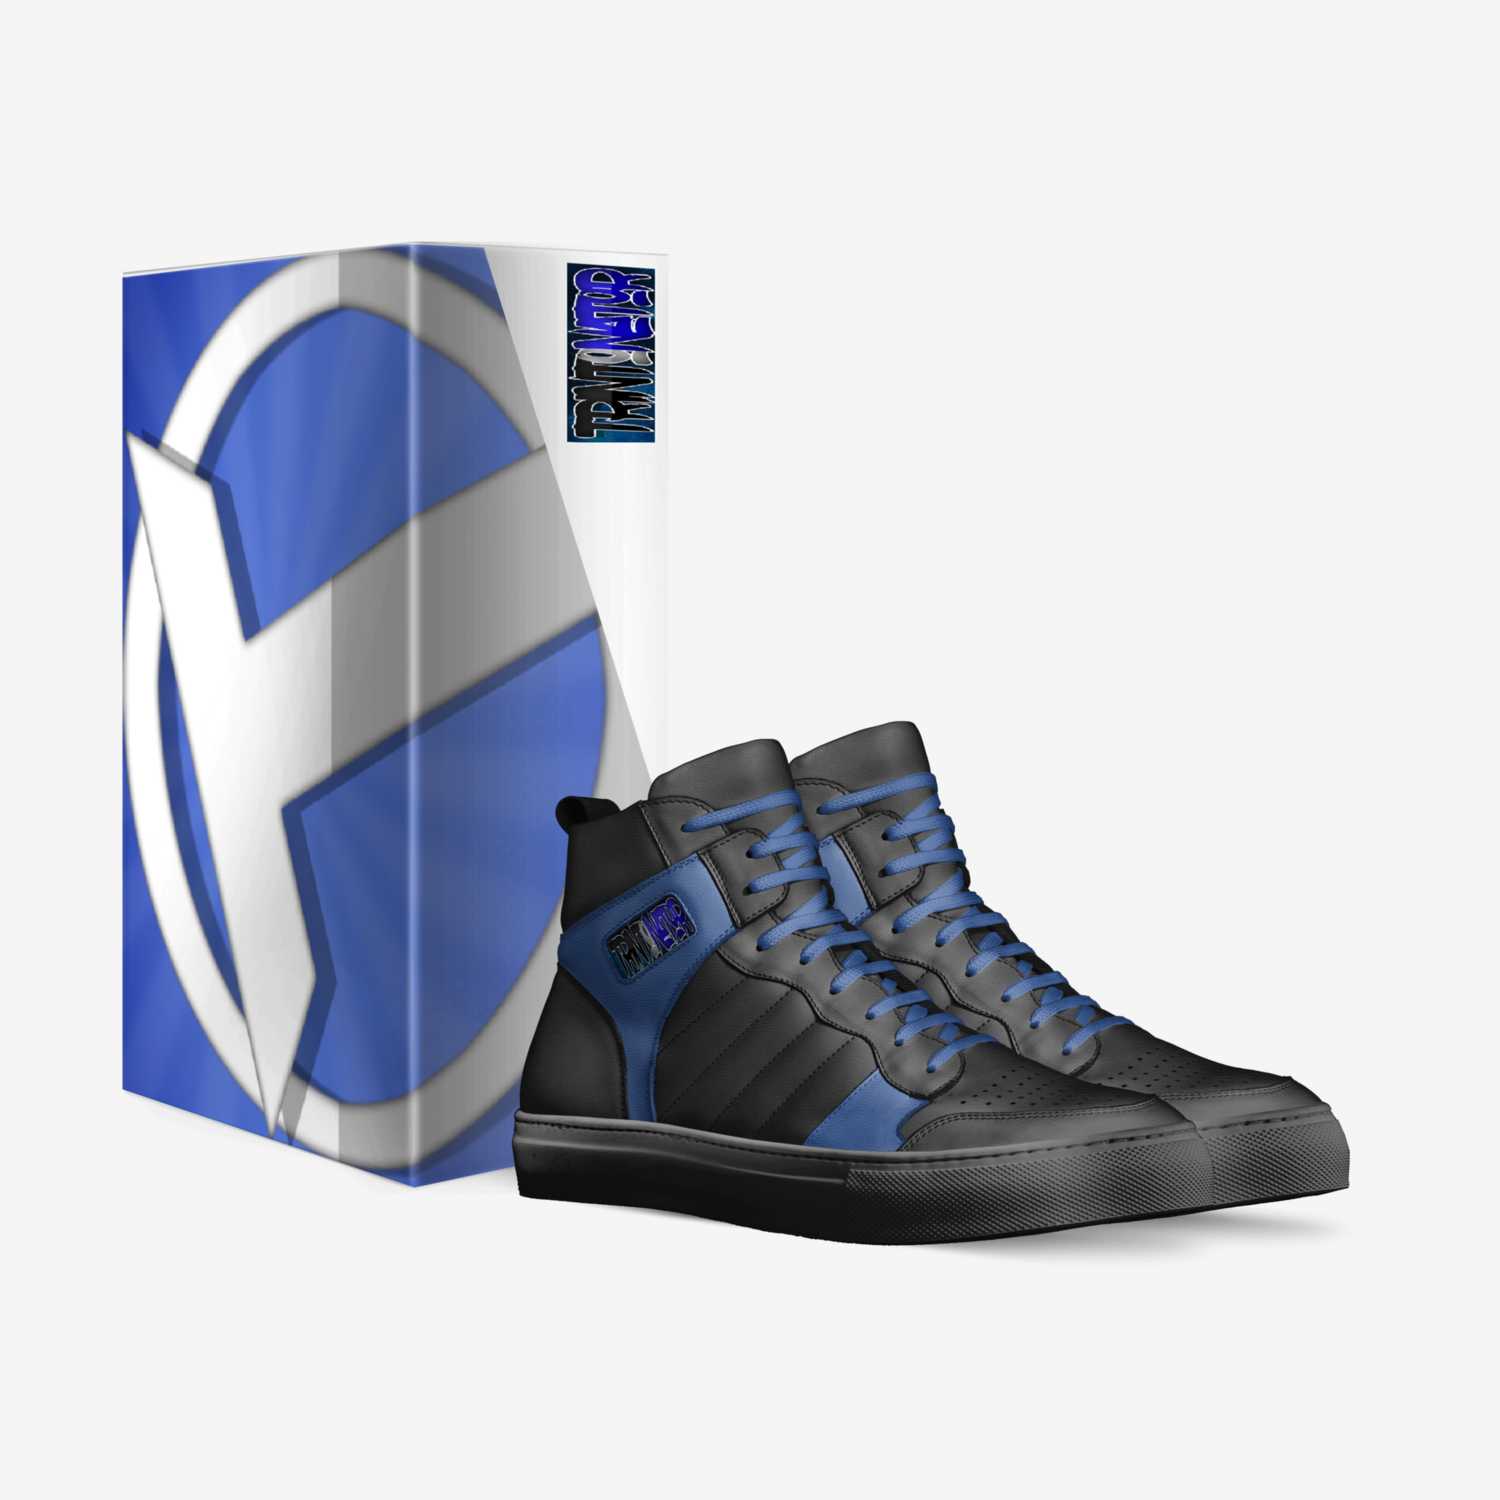 Trintonator_YT custom made in Italy shoes by Trinton Entriken | Box view